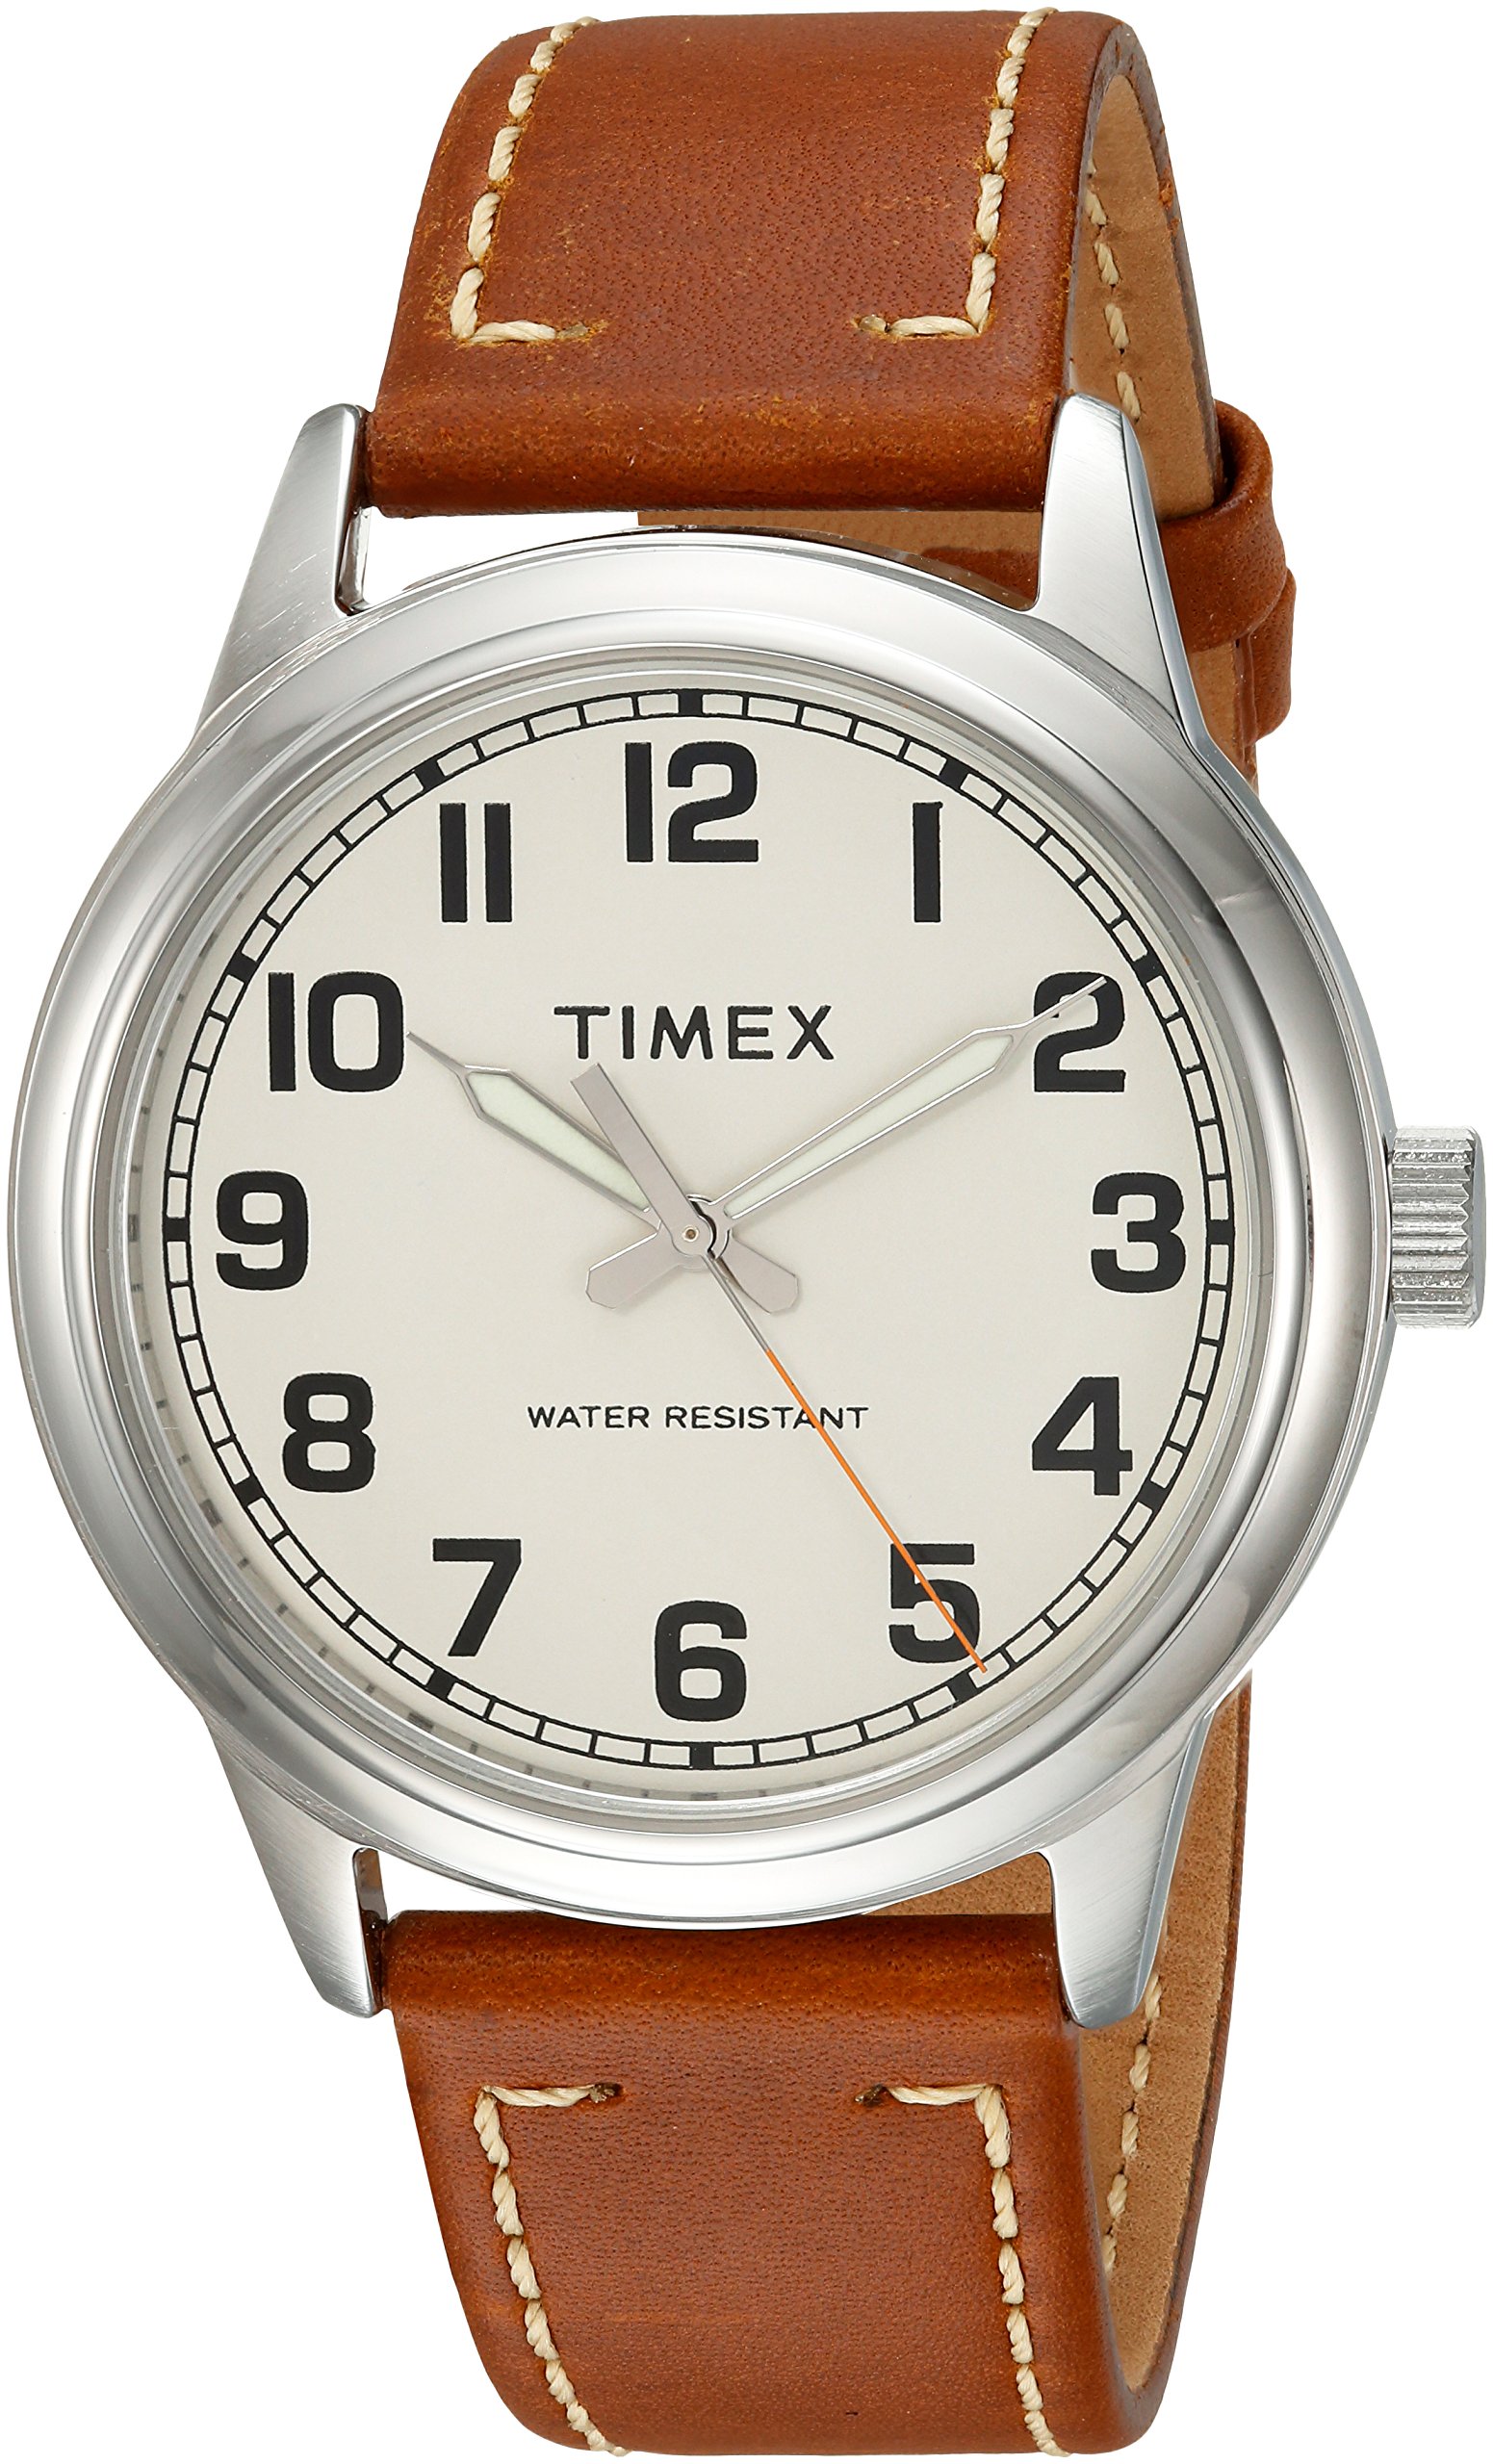 Timex メンズ腕時計 New Englandシリーズ TanCream